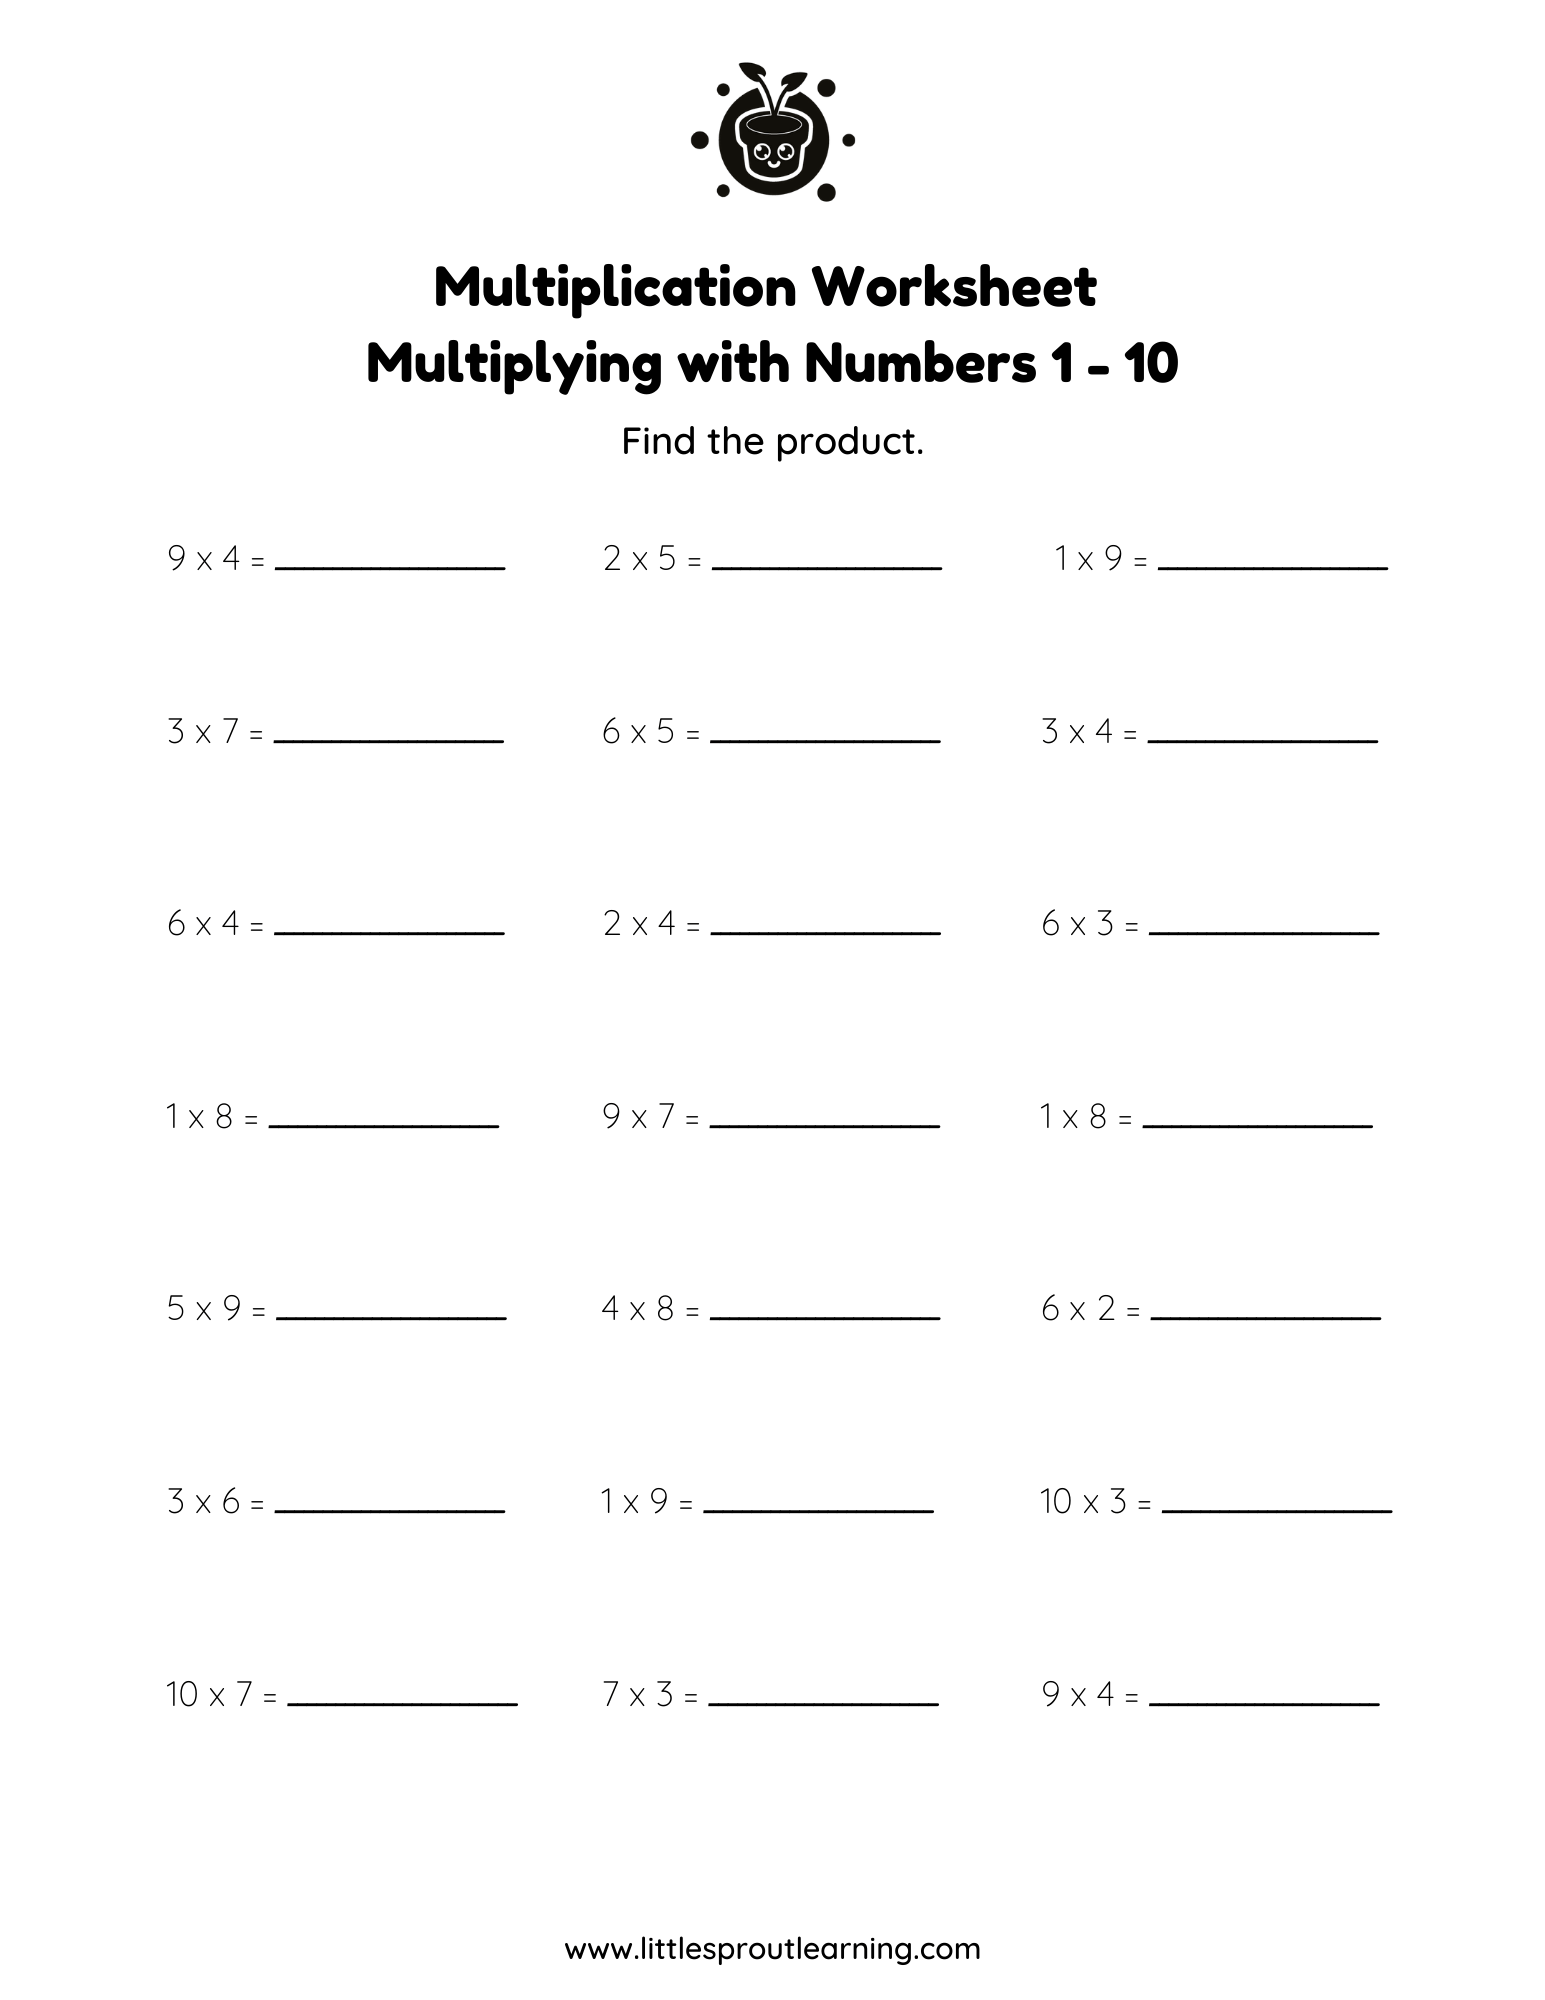 Multiplication Practice Worksheet Multiply 1-10